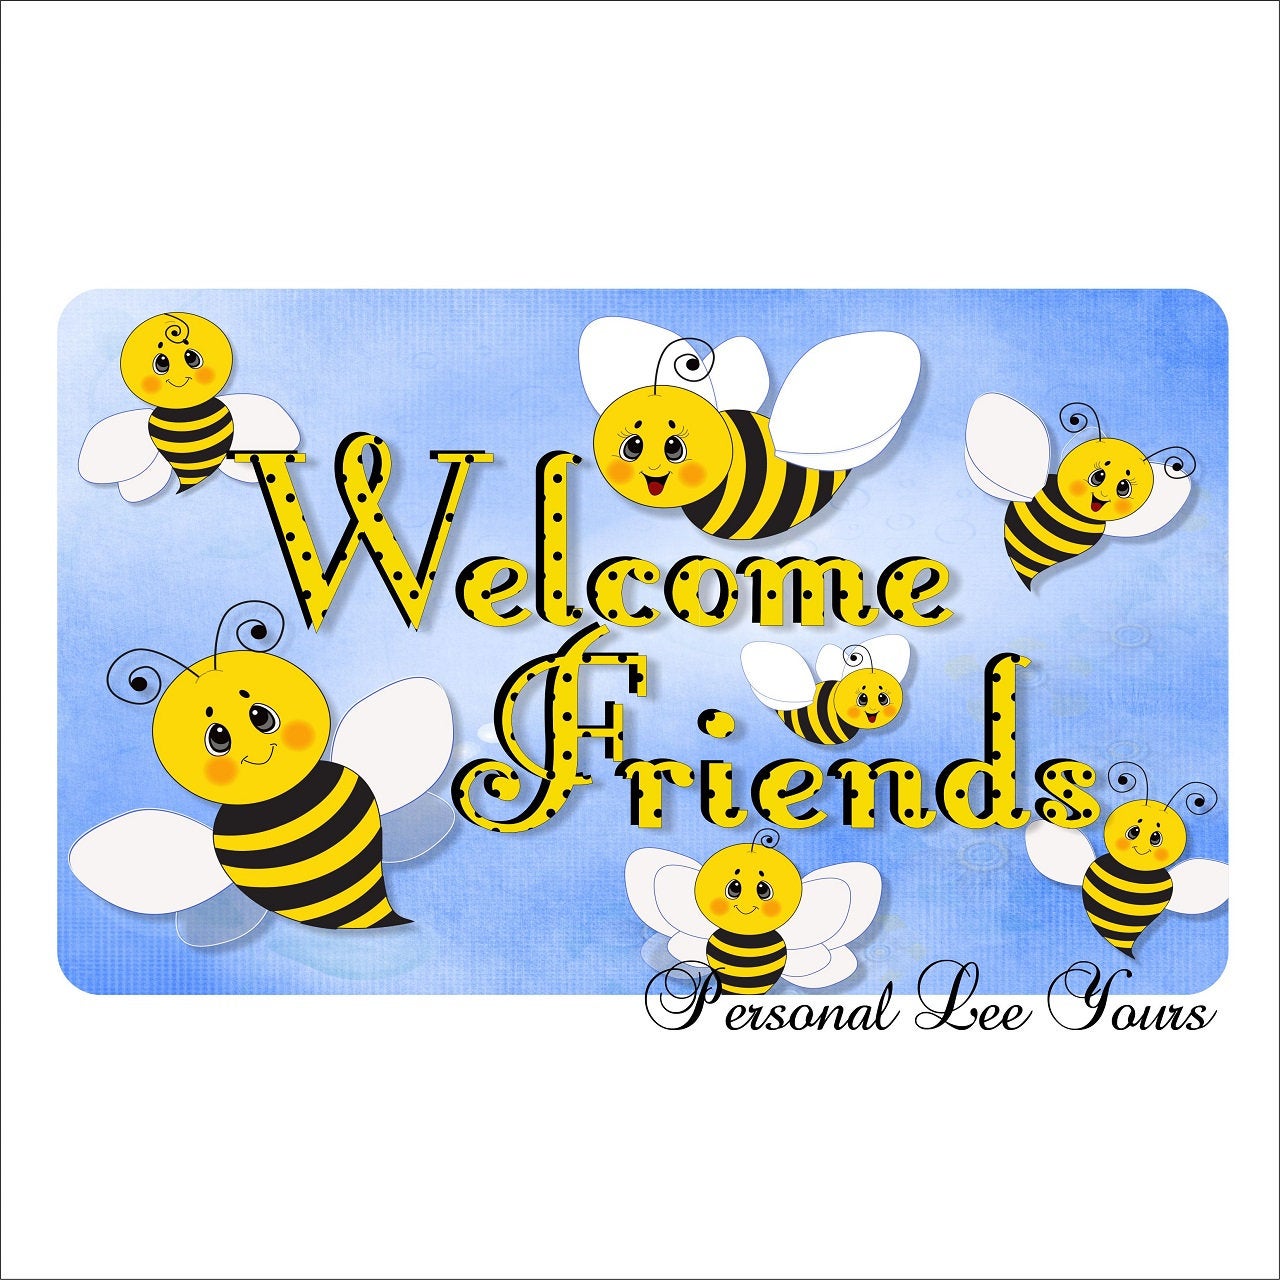 Metal Wreath Sign * Honey Bee Welcome Friends * 3 Sizes * Lightweight